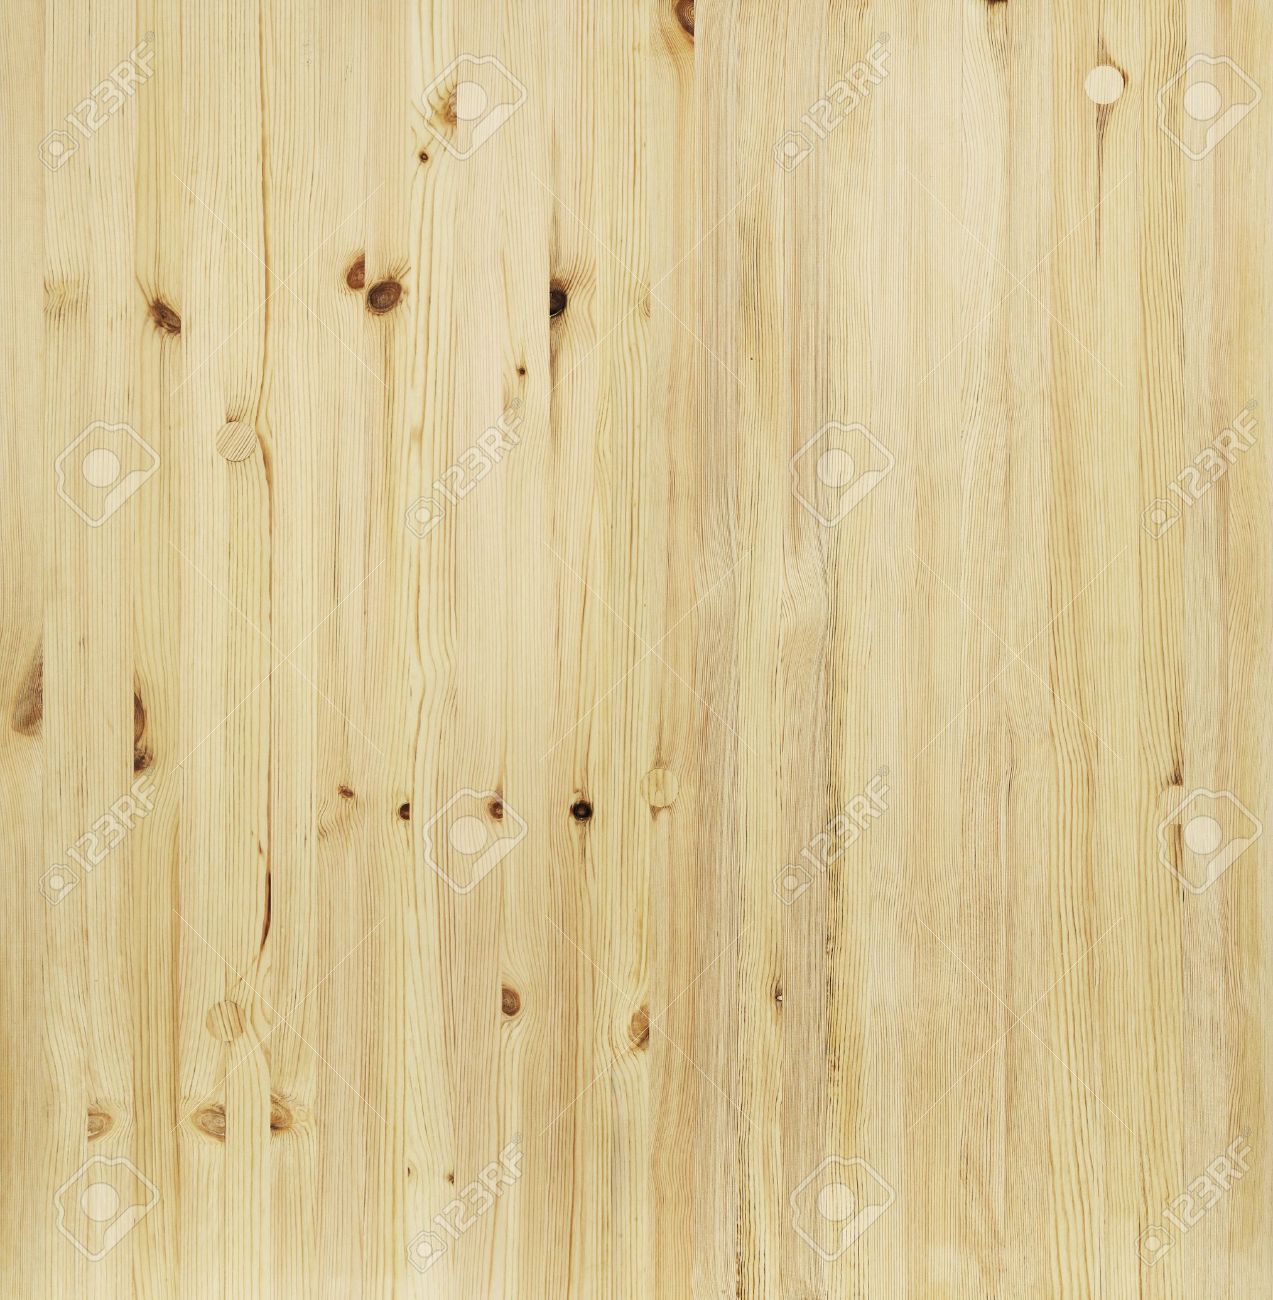 Pine wood furniture